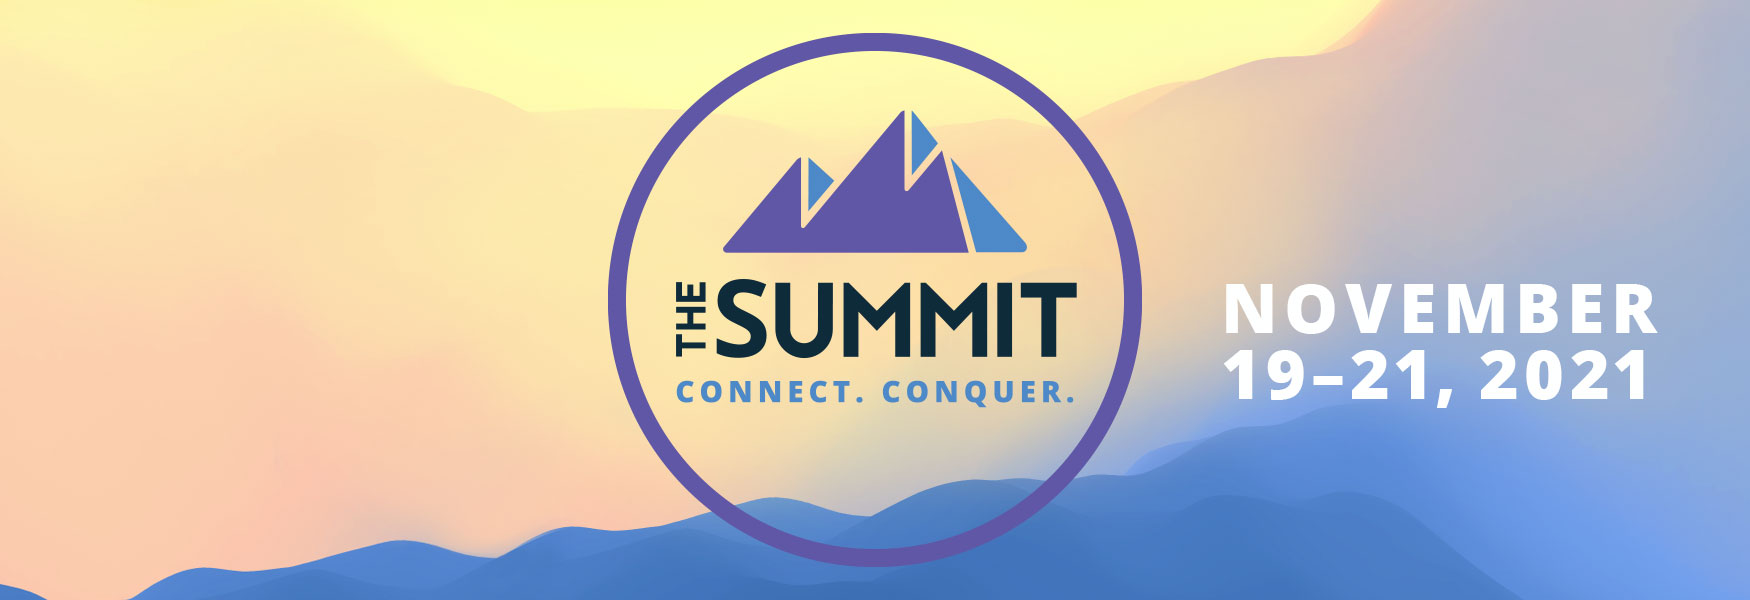 21-ASDA-Summit-web-banner-1750x600-F